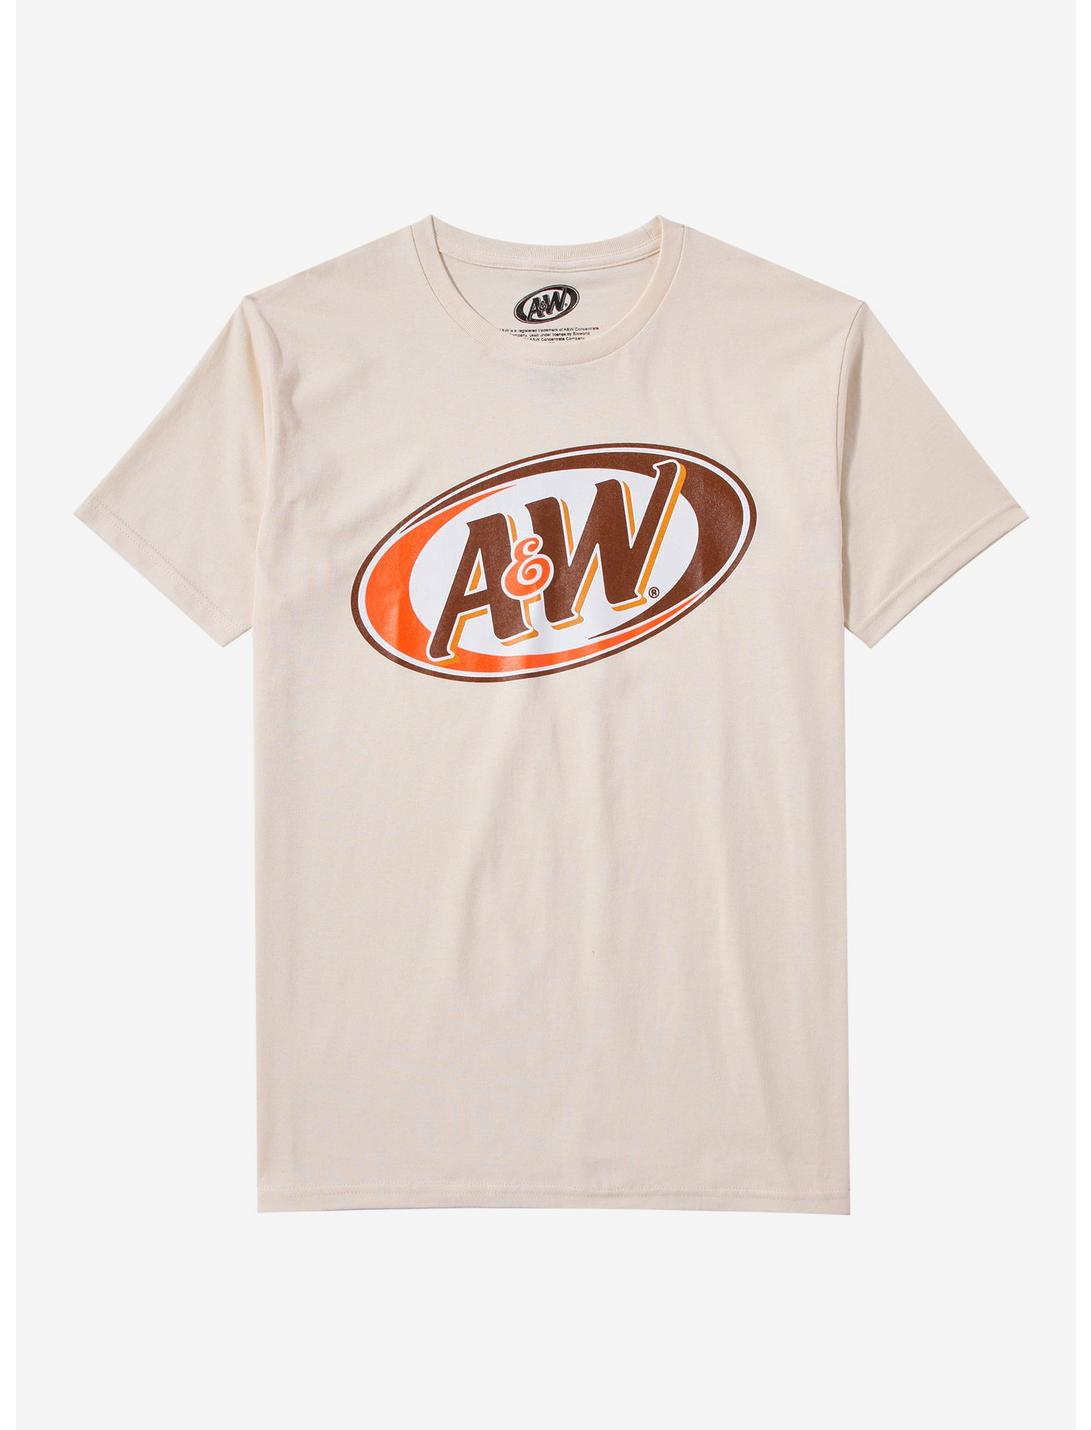 A&W Root Beer Logo T-Shirt, SAND, hi-res